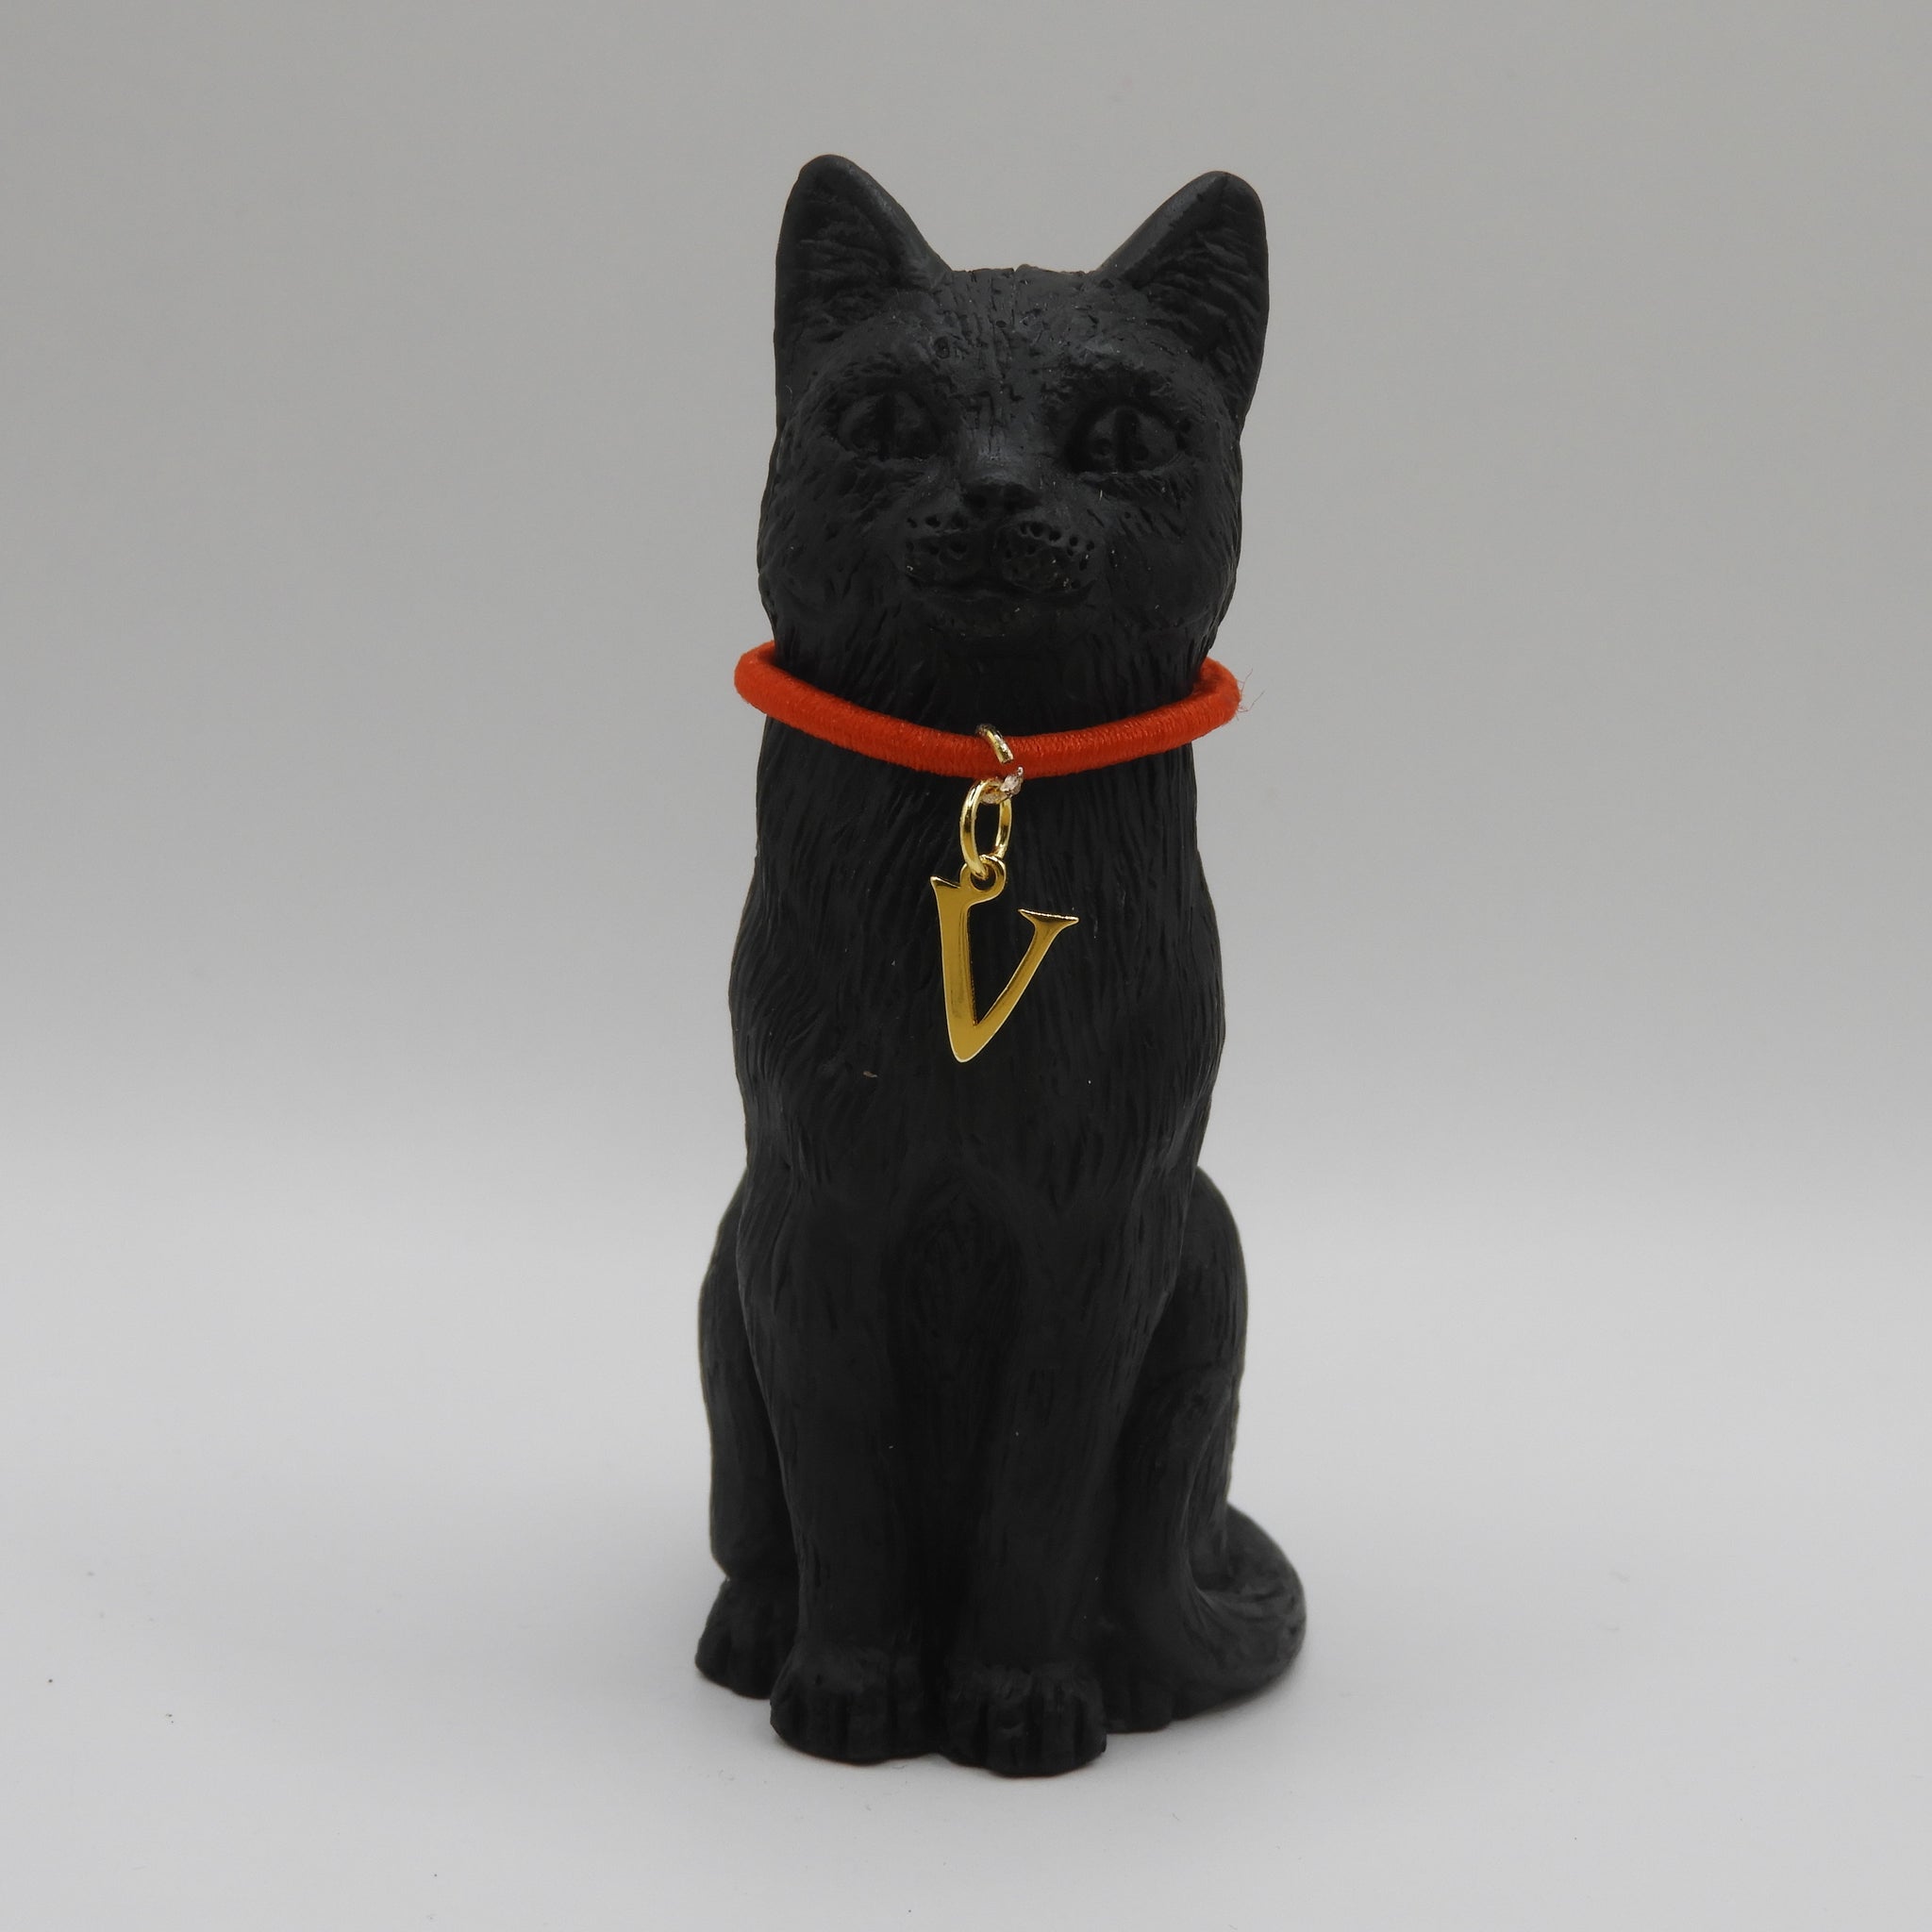 8cm Original Lucky Cat with Initial V Charm